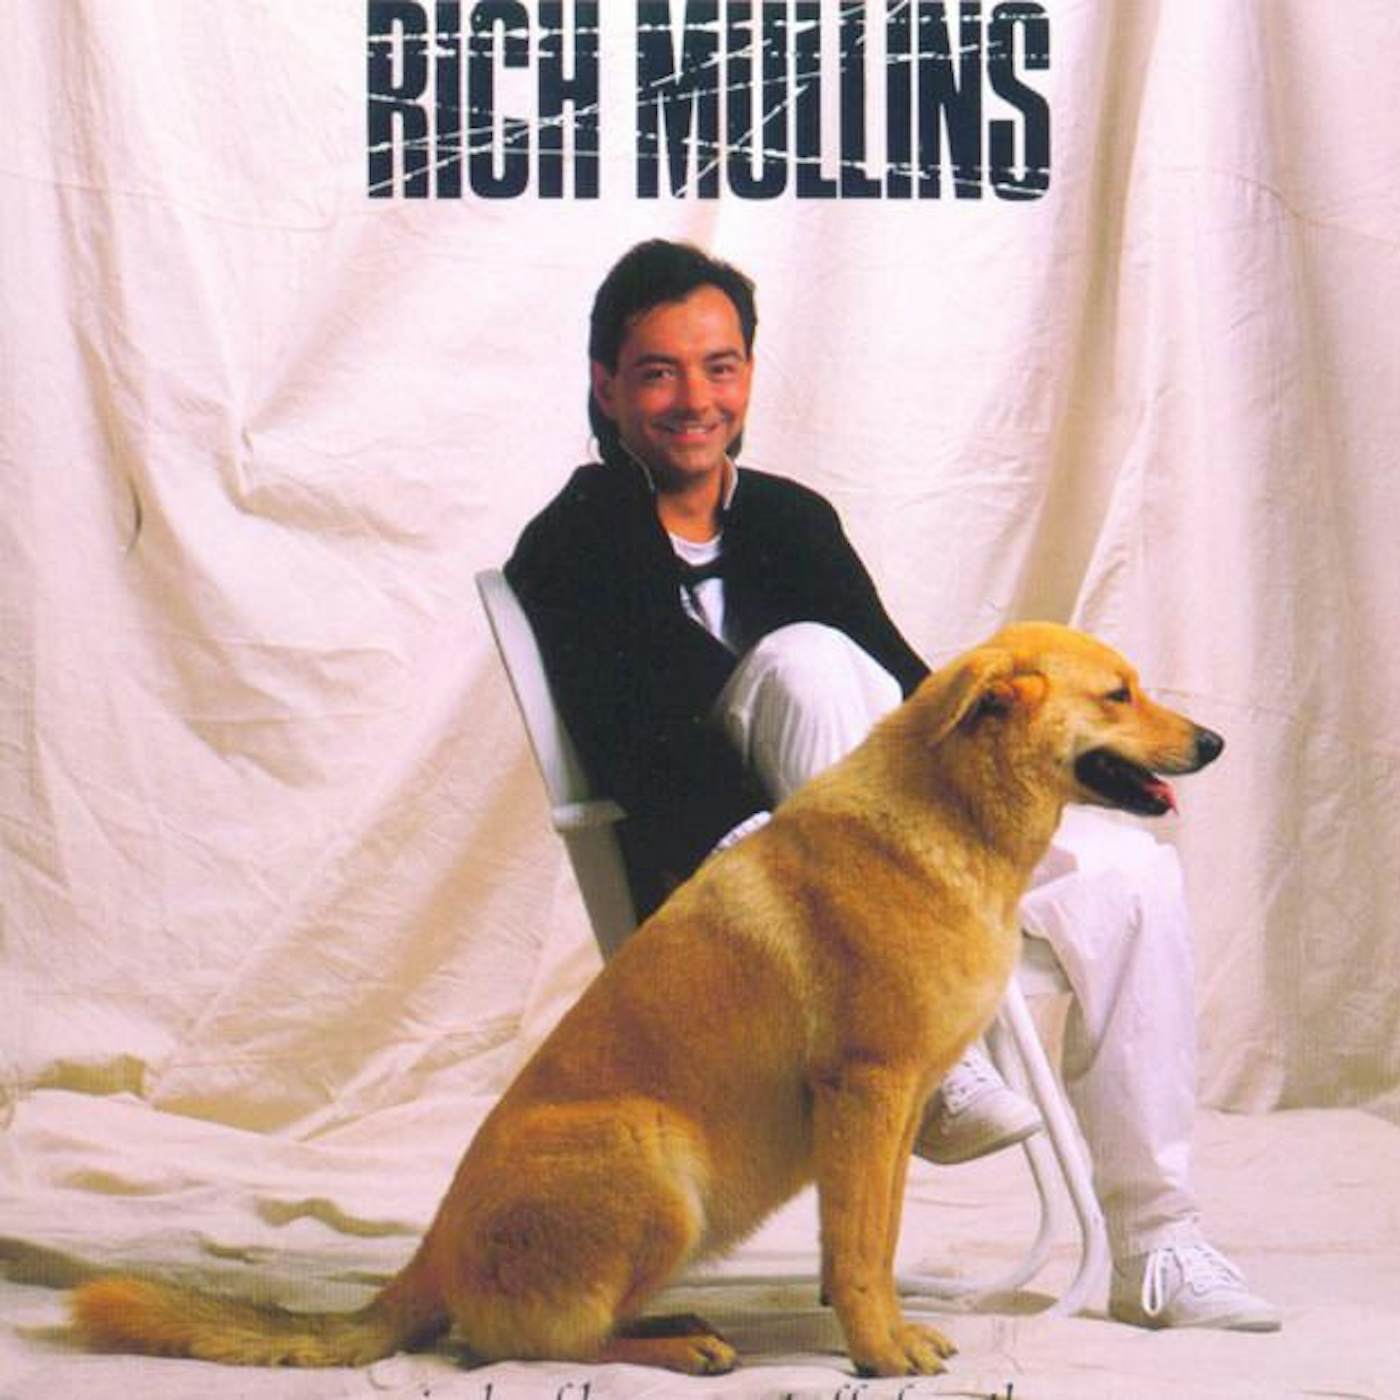 Rich Mullins